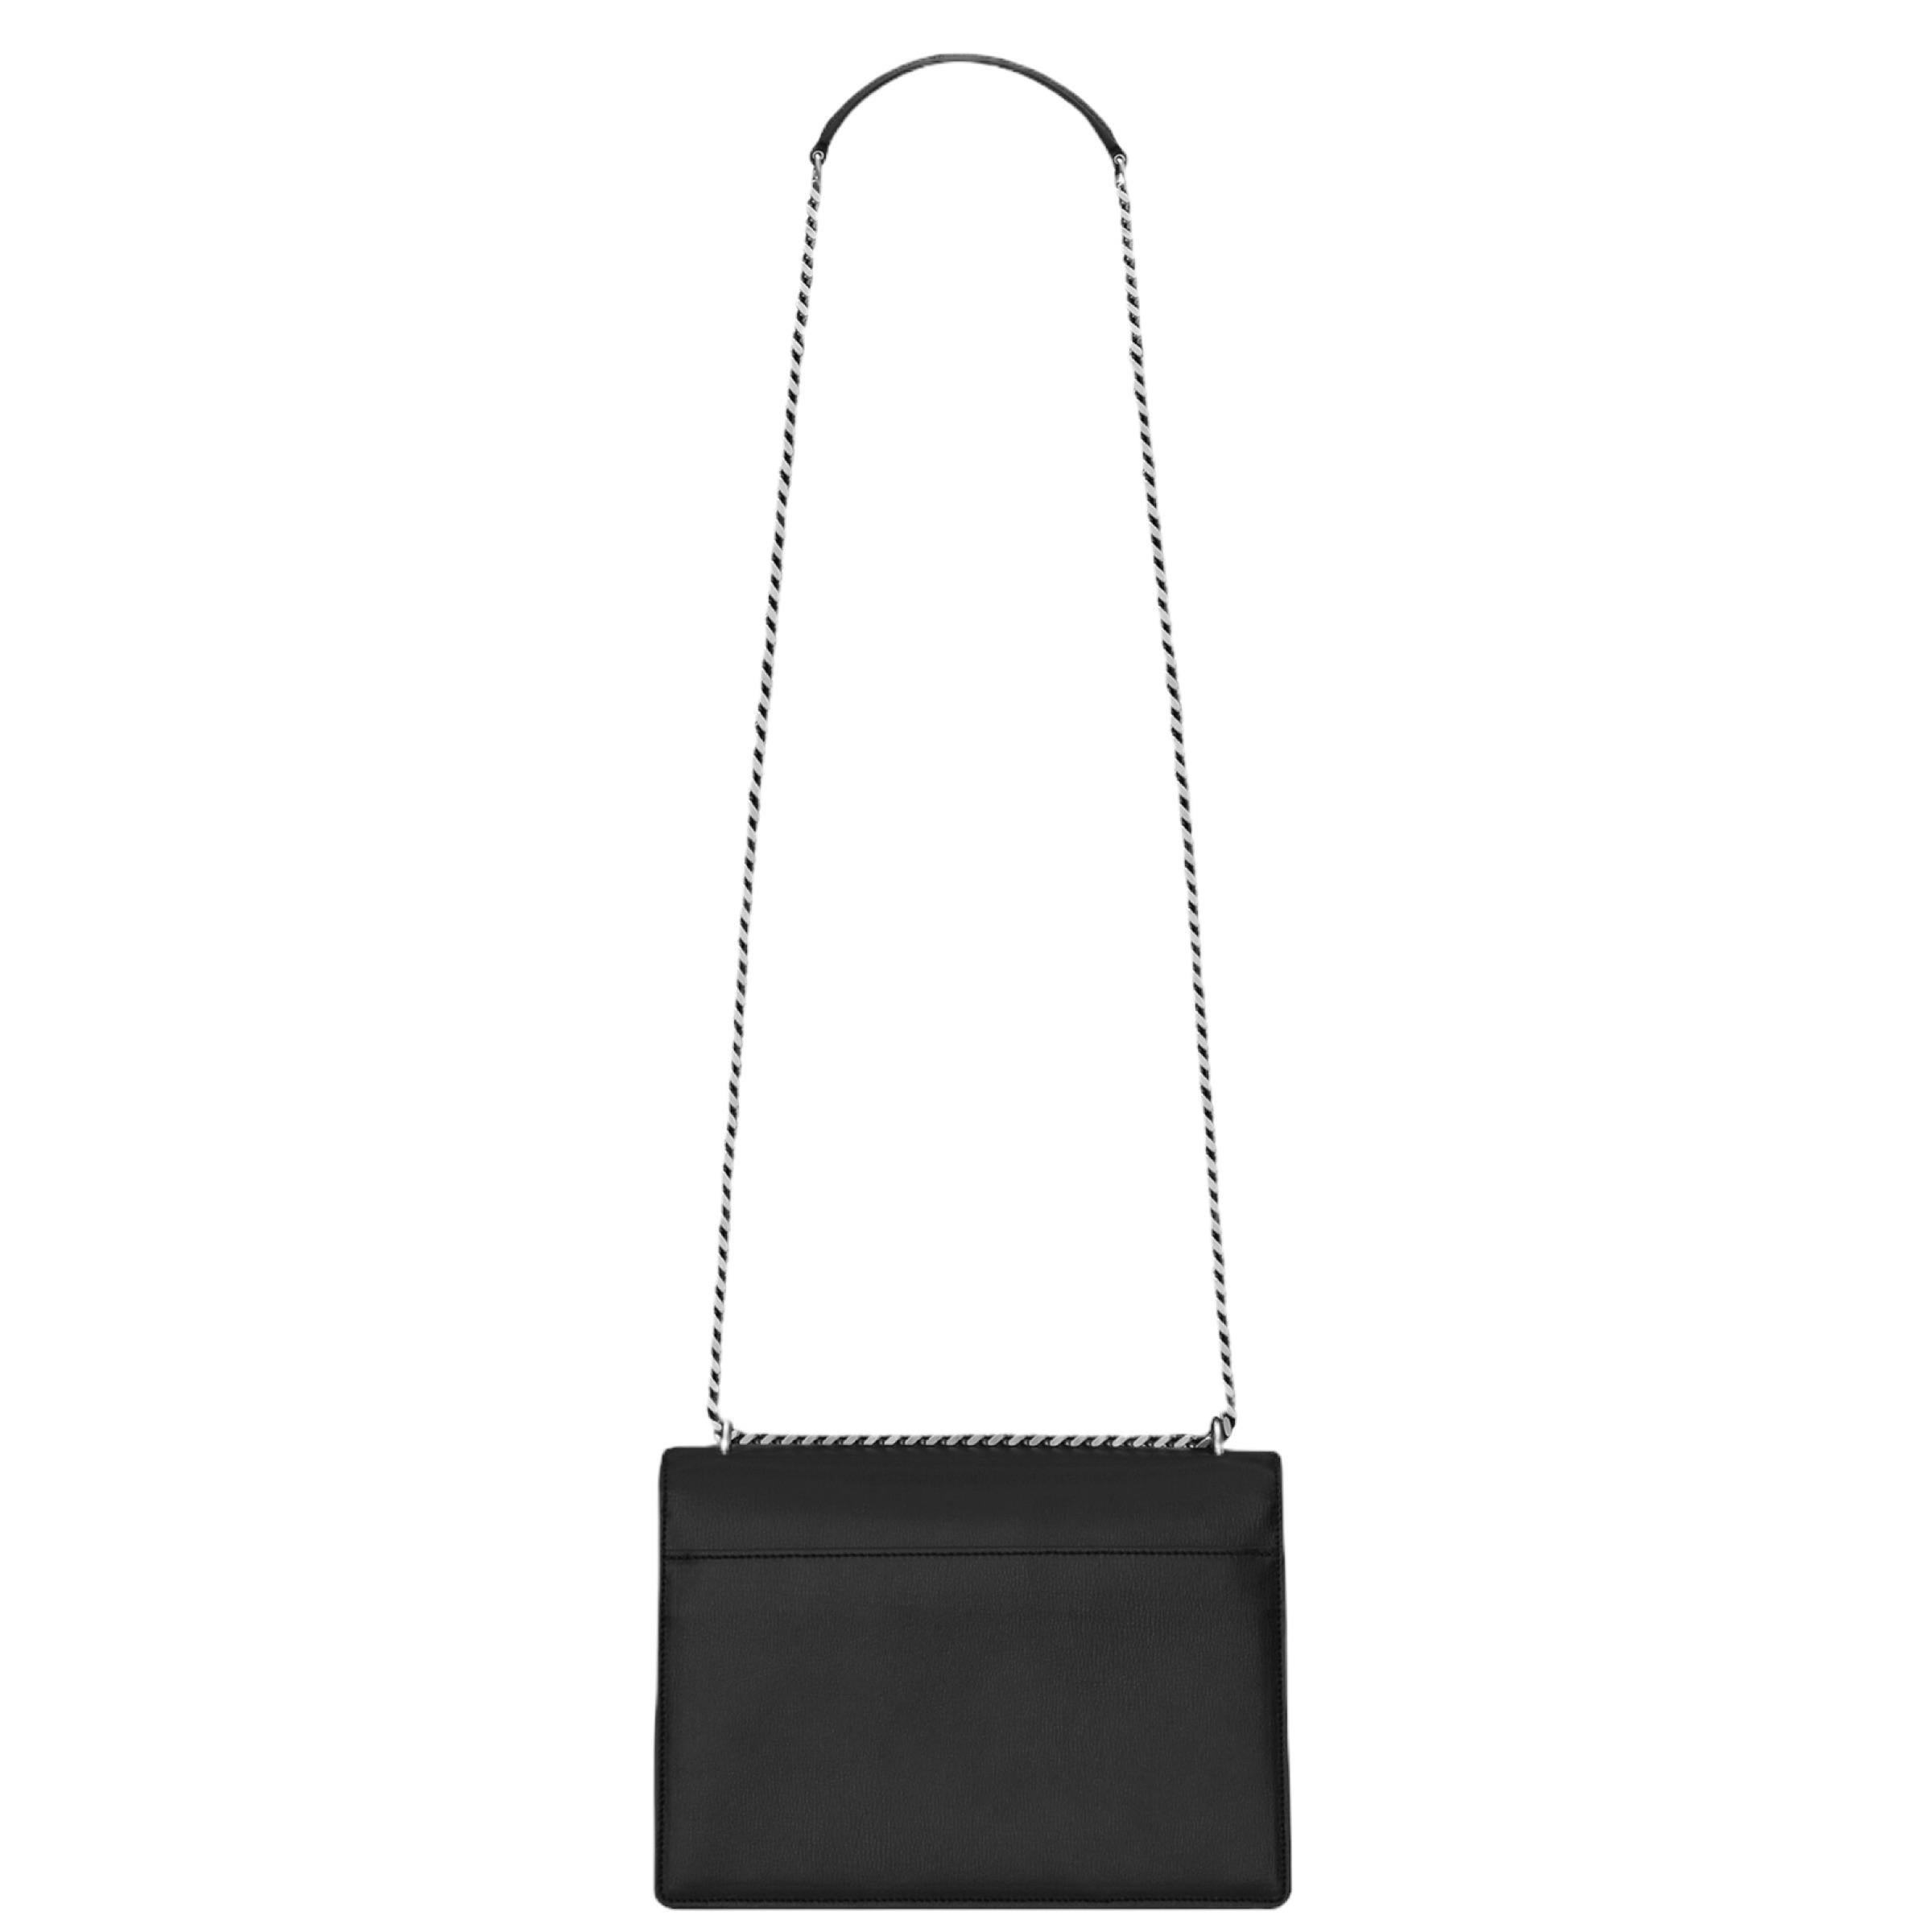 NEW Saint Laurent Black Medium Sunset Leather Crossbody Shoulder Bag For Sale 3